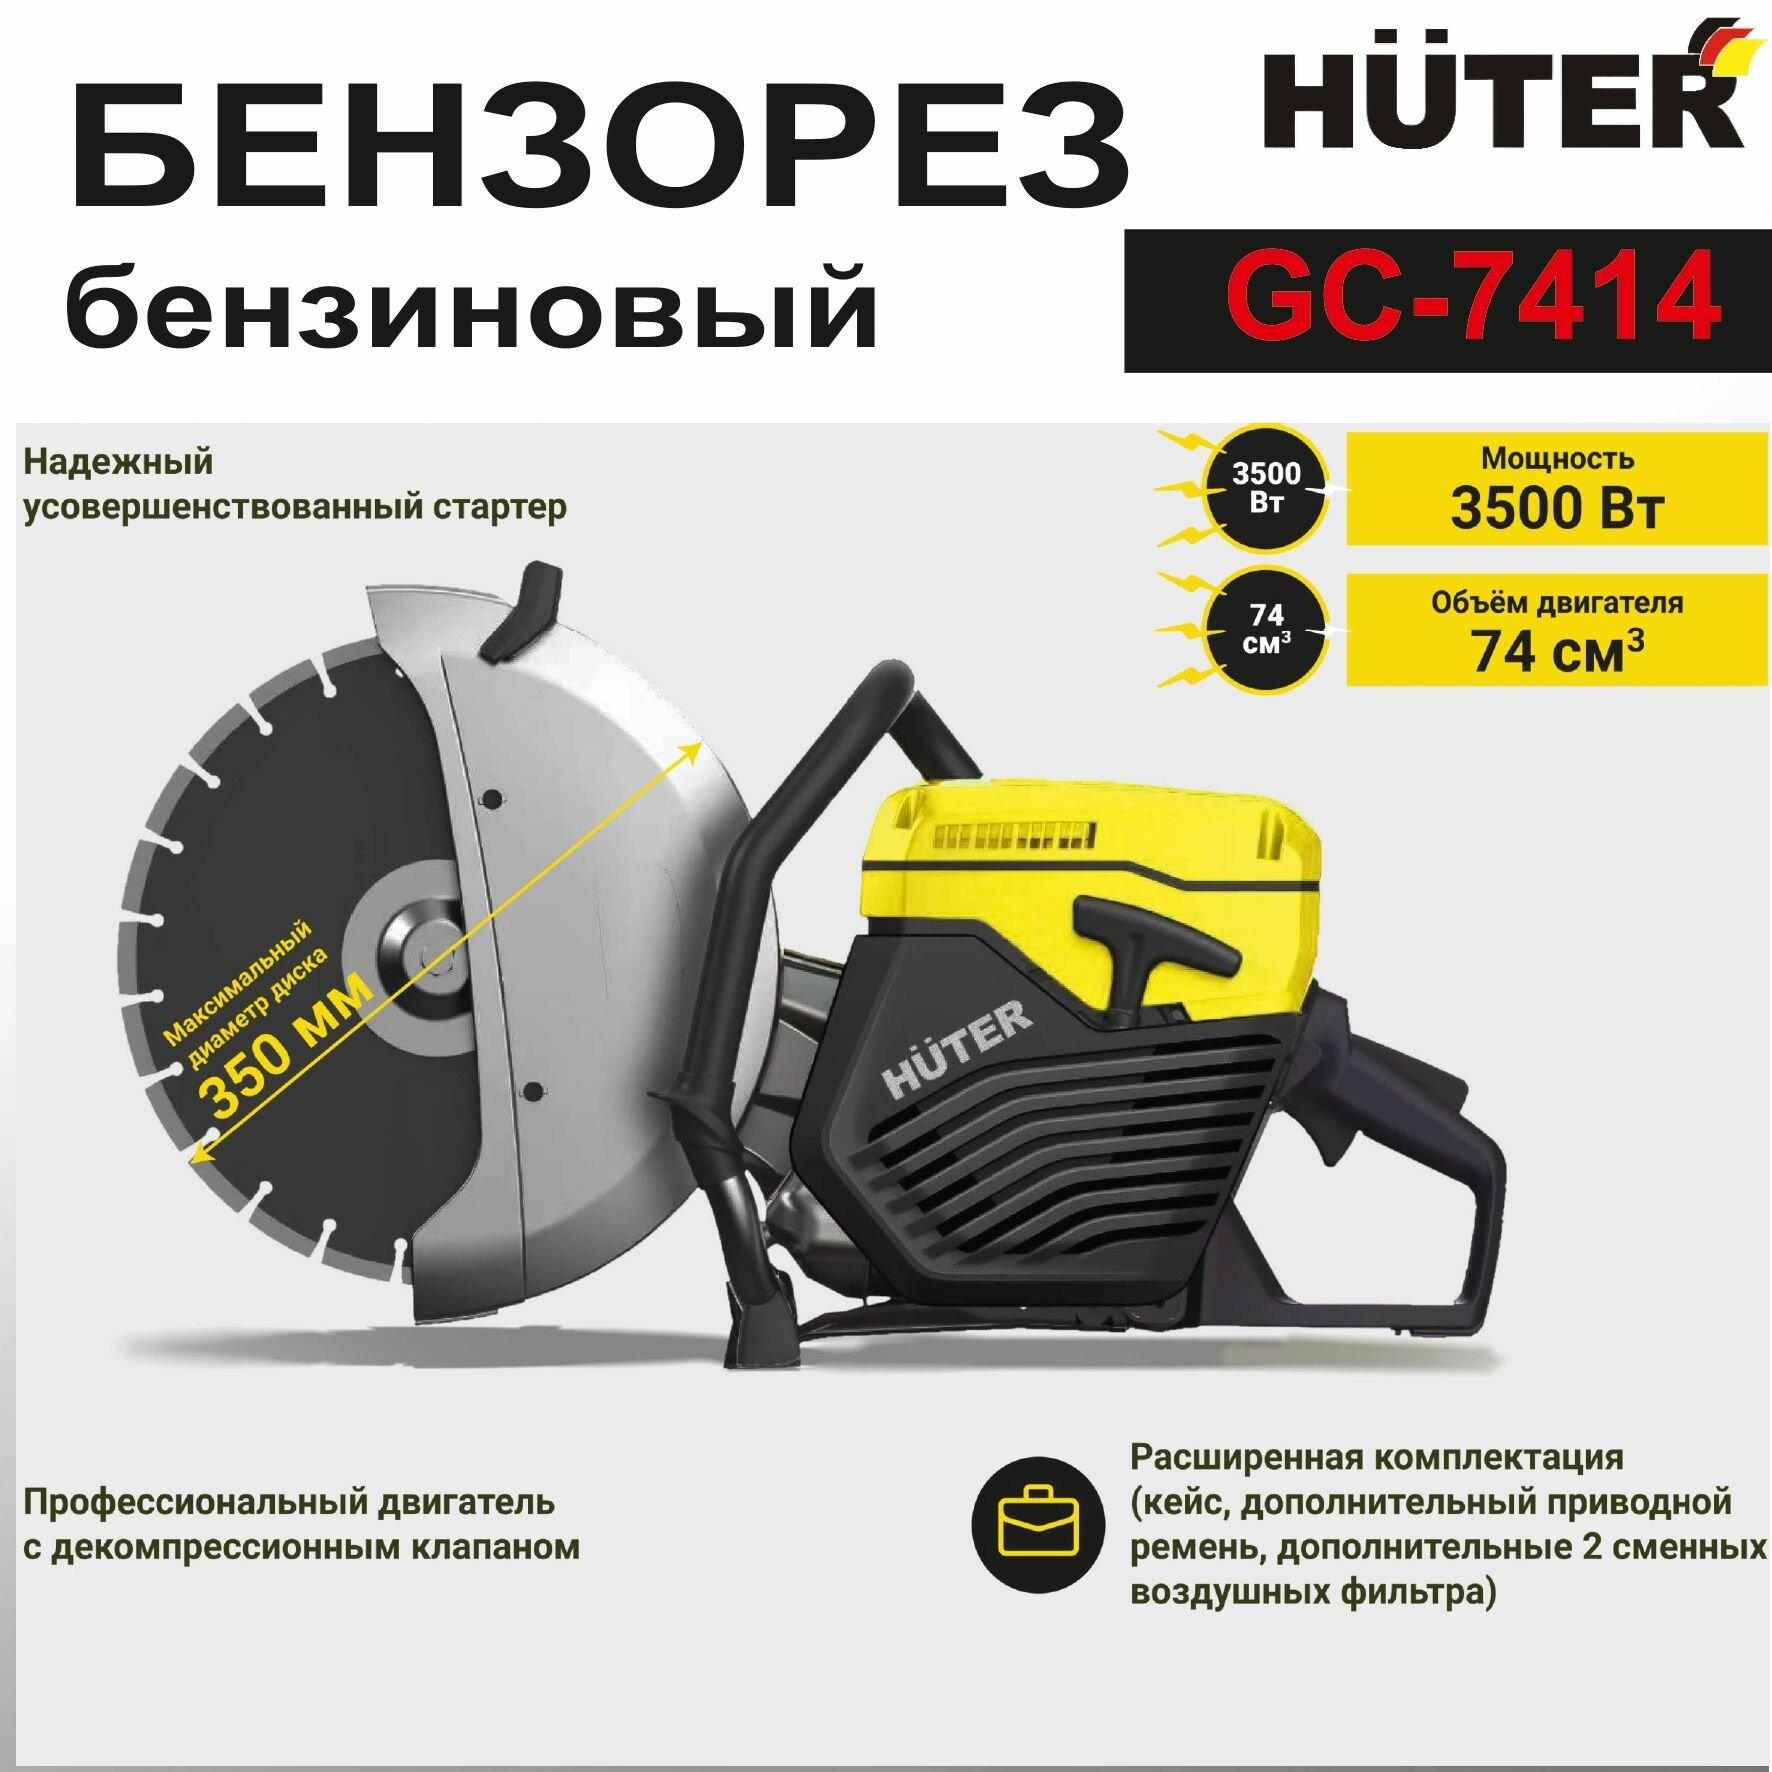 Бензорез Huter GC-7414